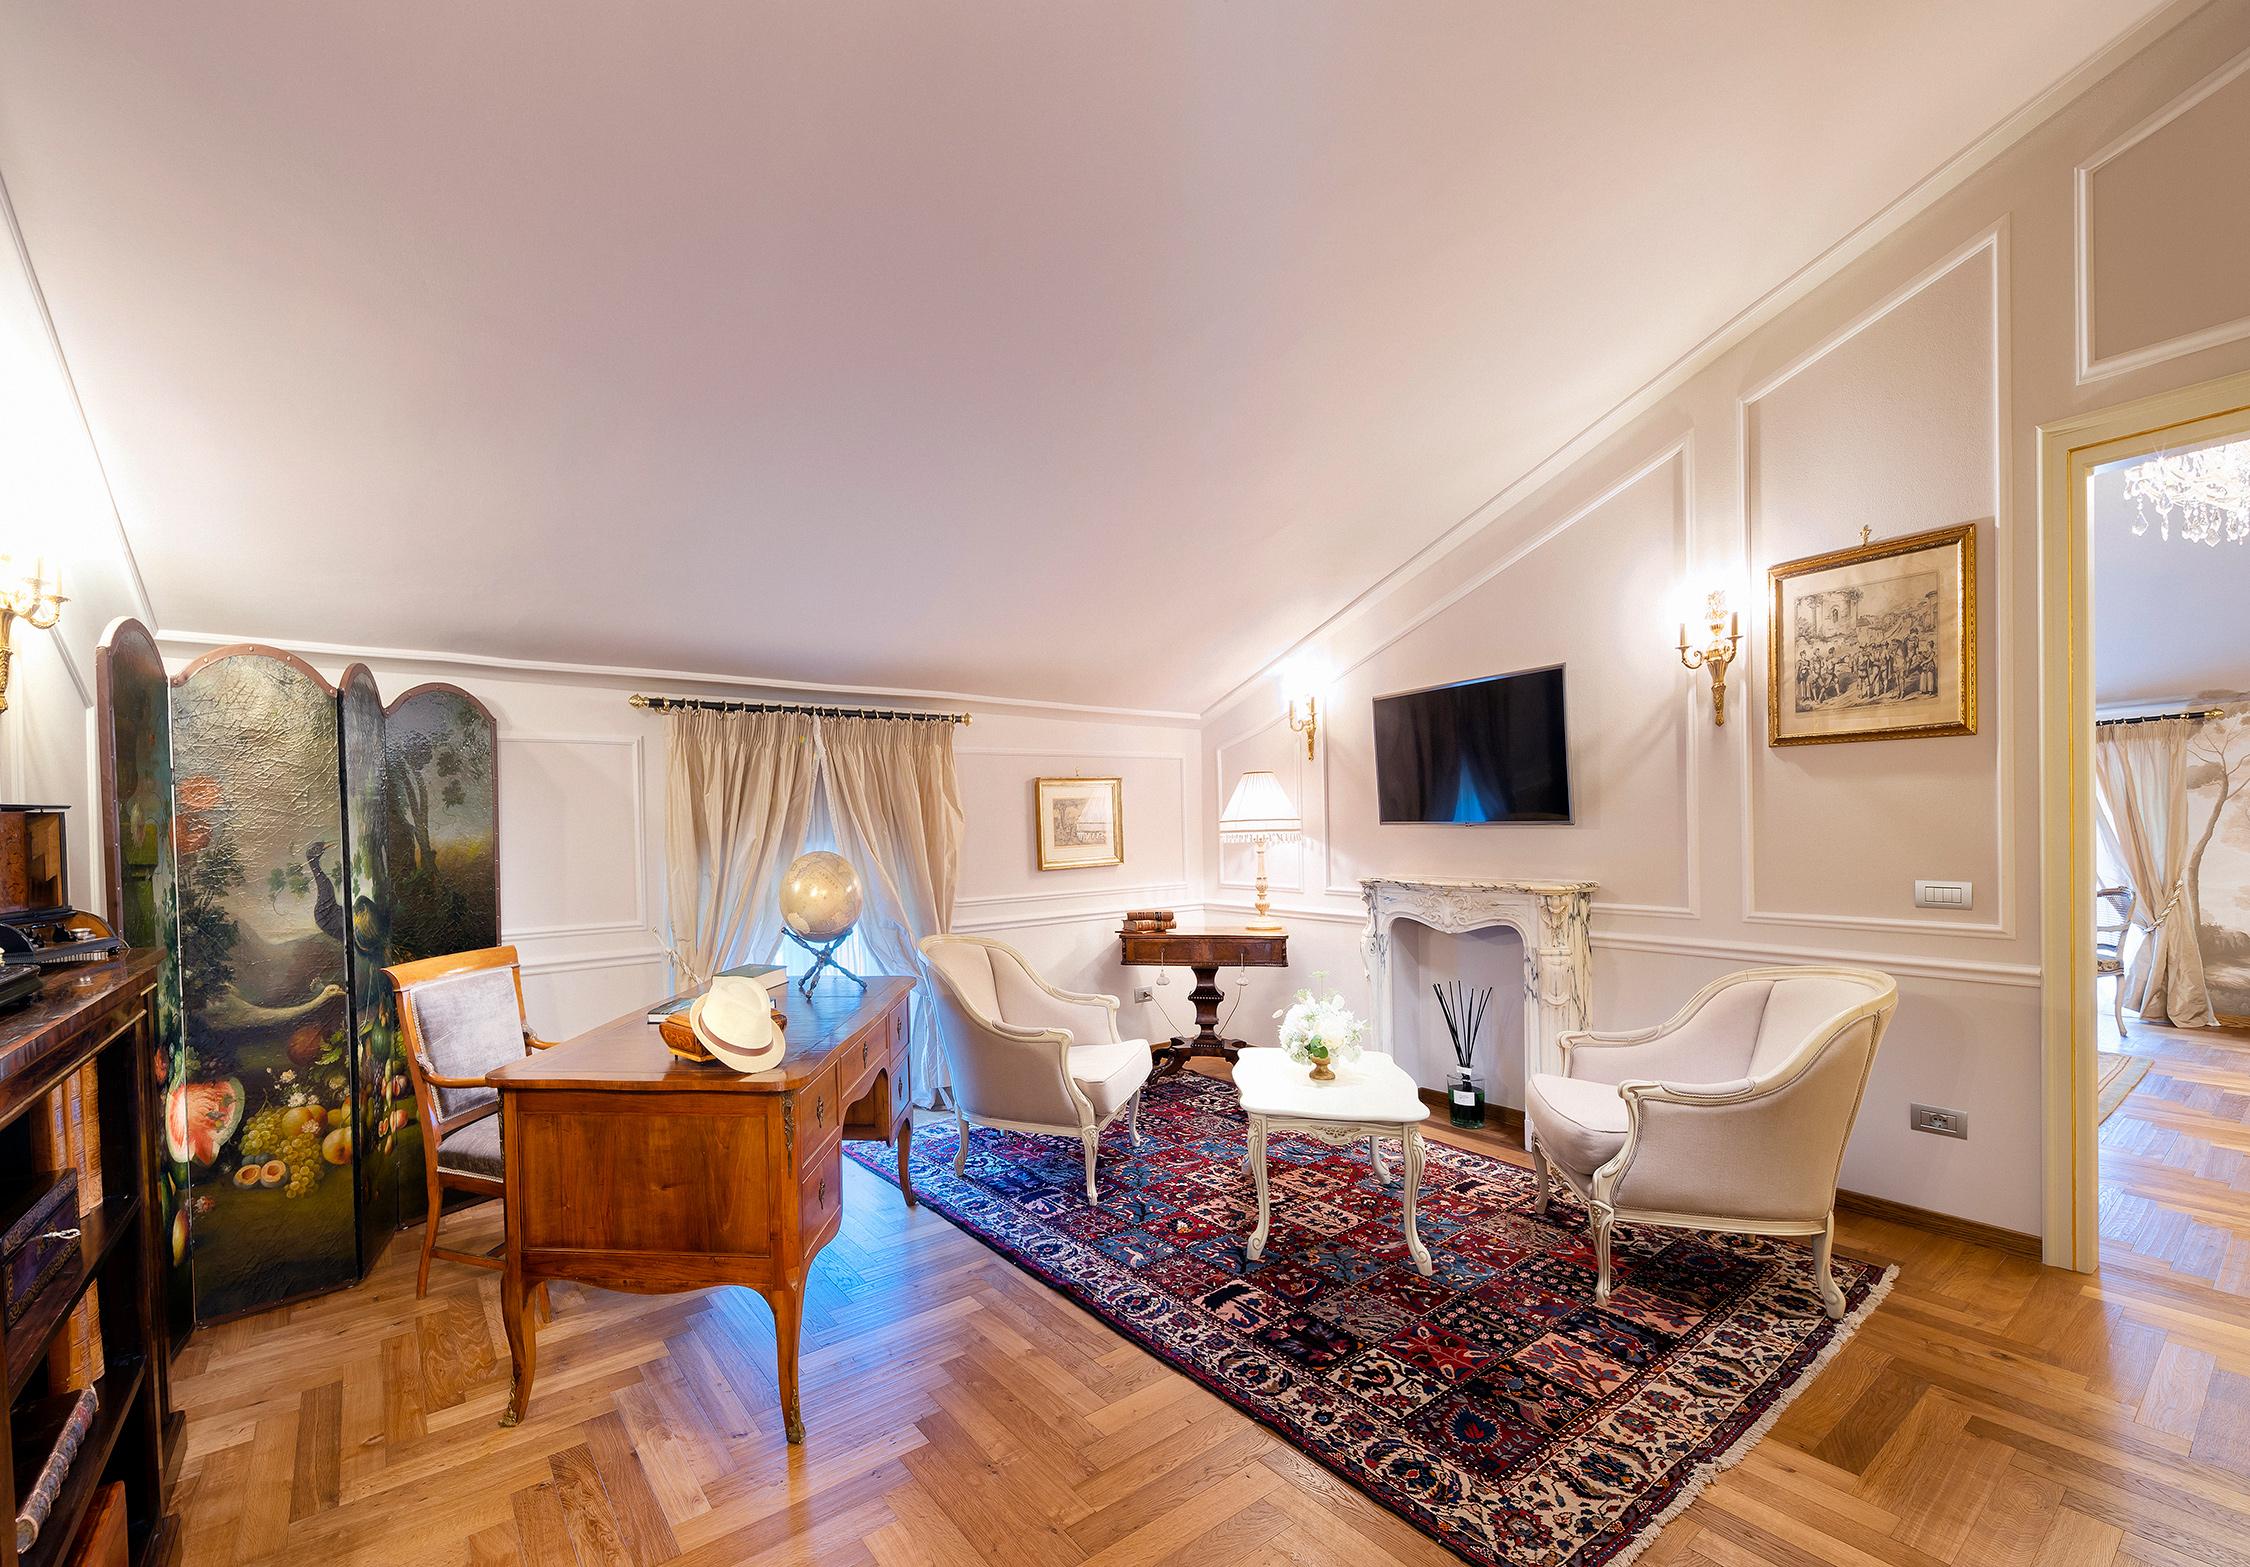 Villa Valentini Bonaparte eleganti Suites e Camere per Vacanze tra Toscana e Umbria